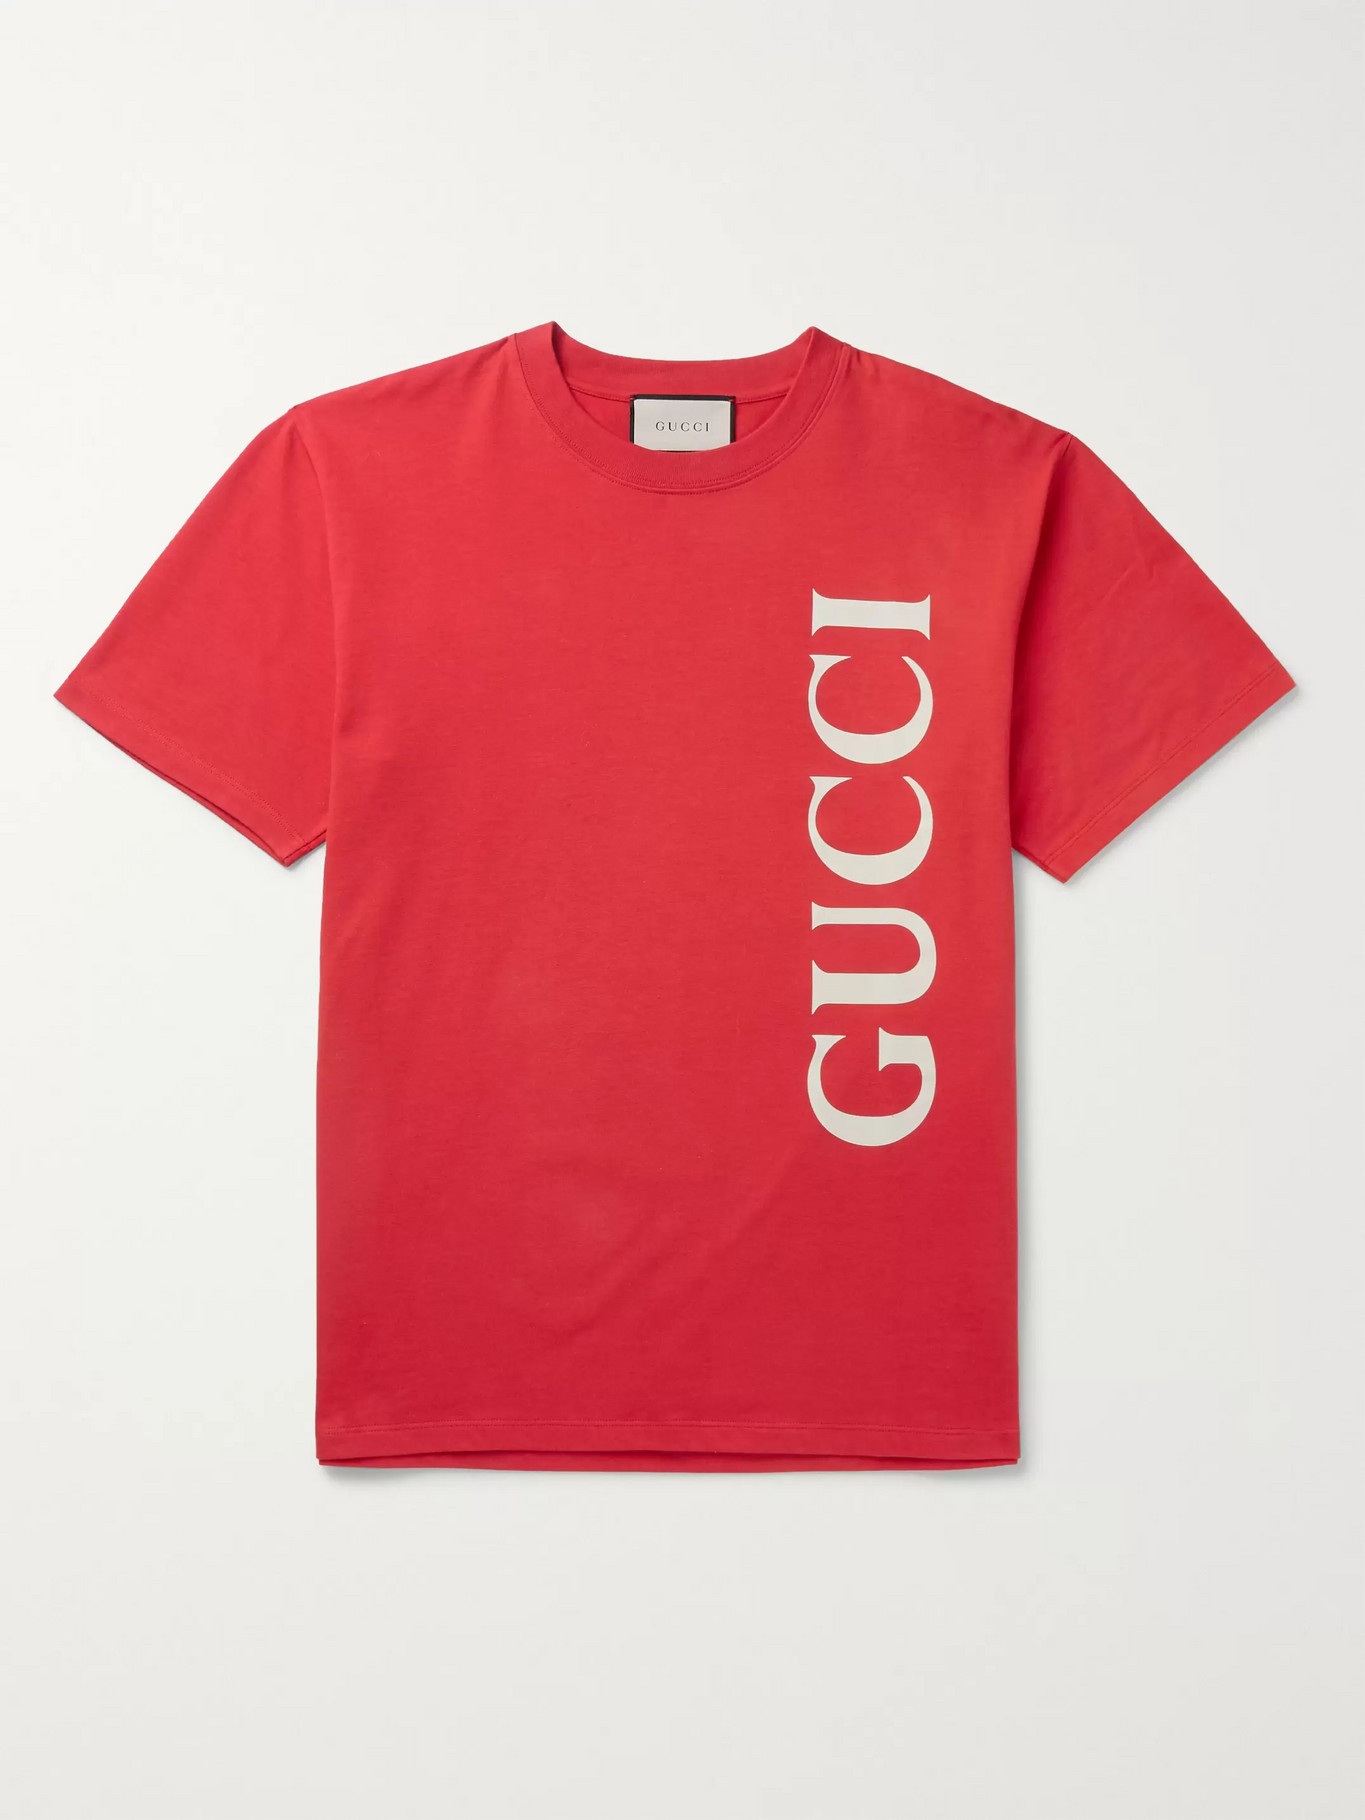 Gucci Shirt Cheap Roblox Mount Mercy University - Roblox Adopt Me Money ...